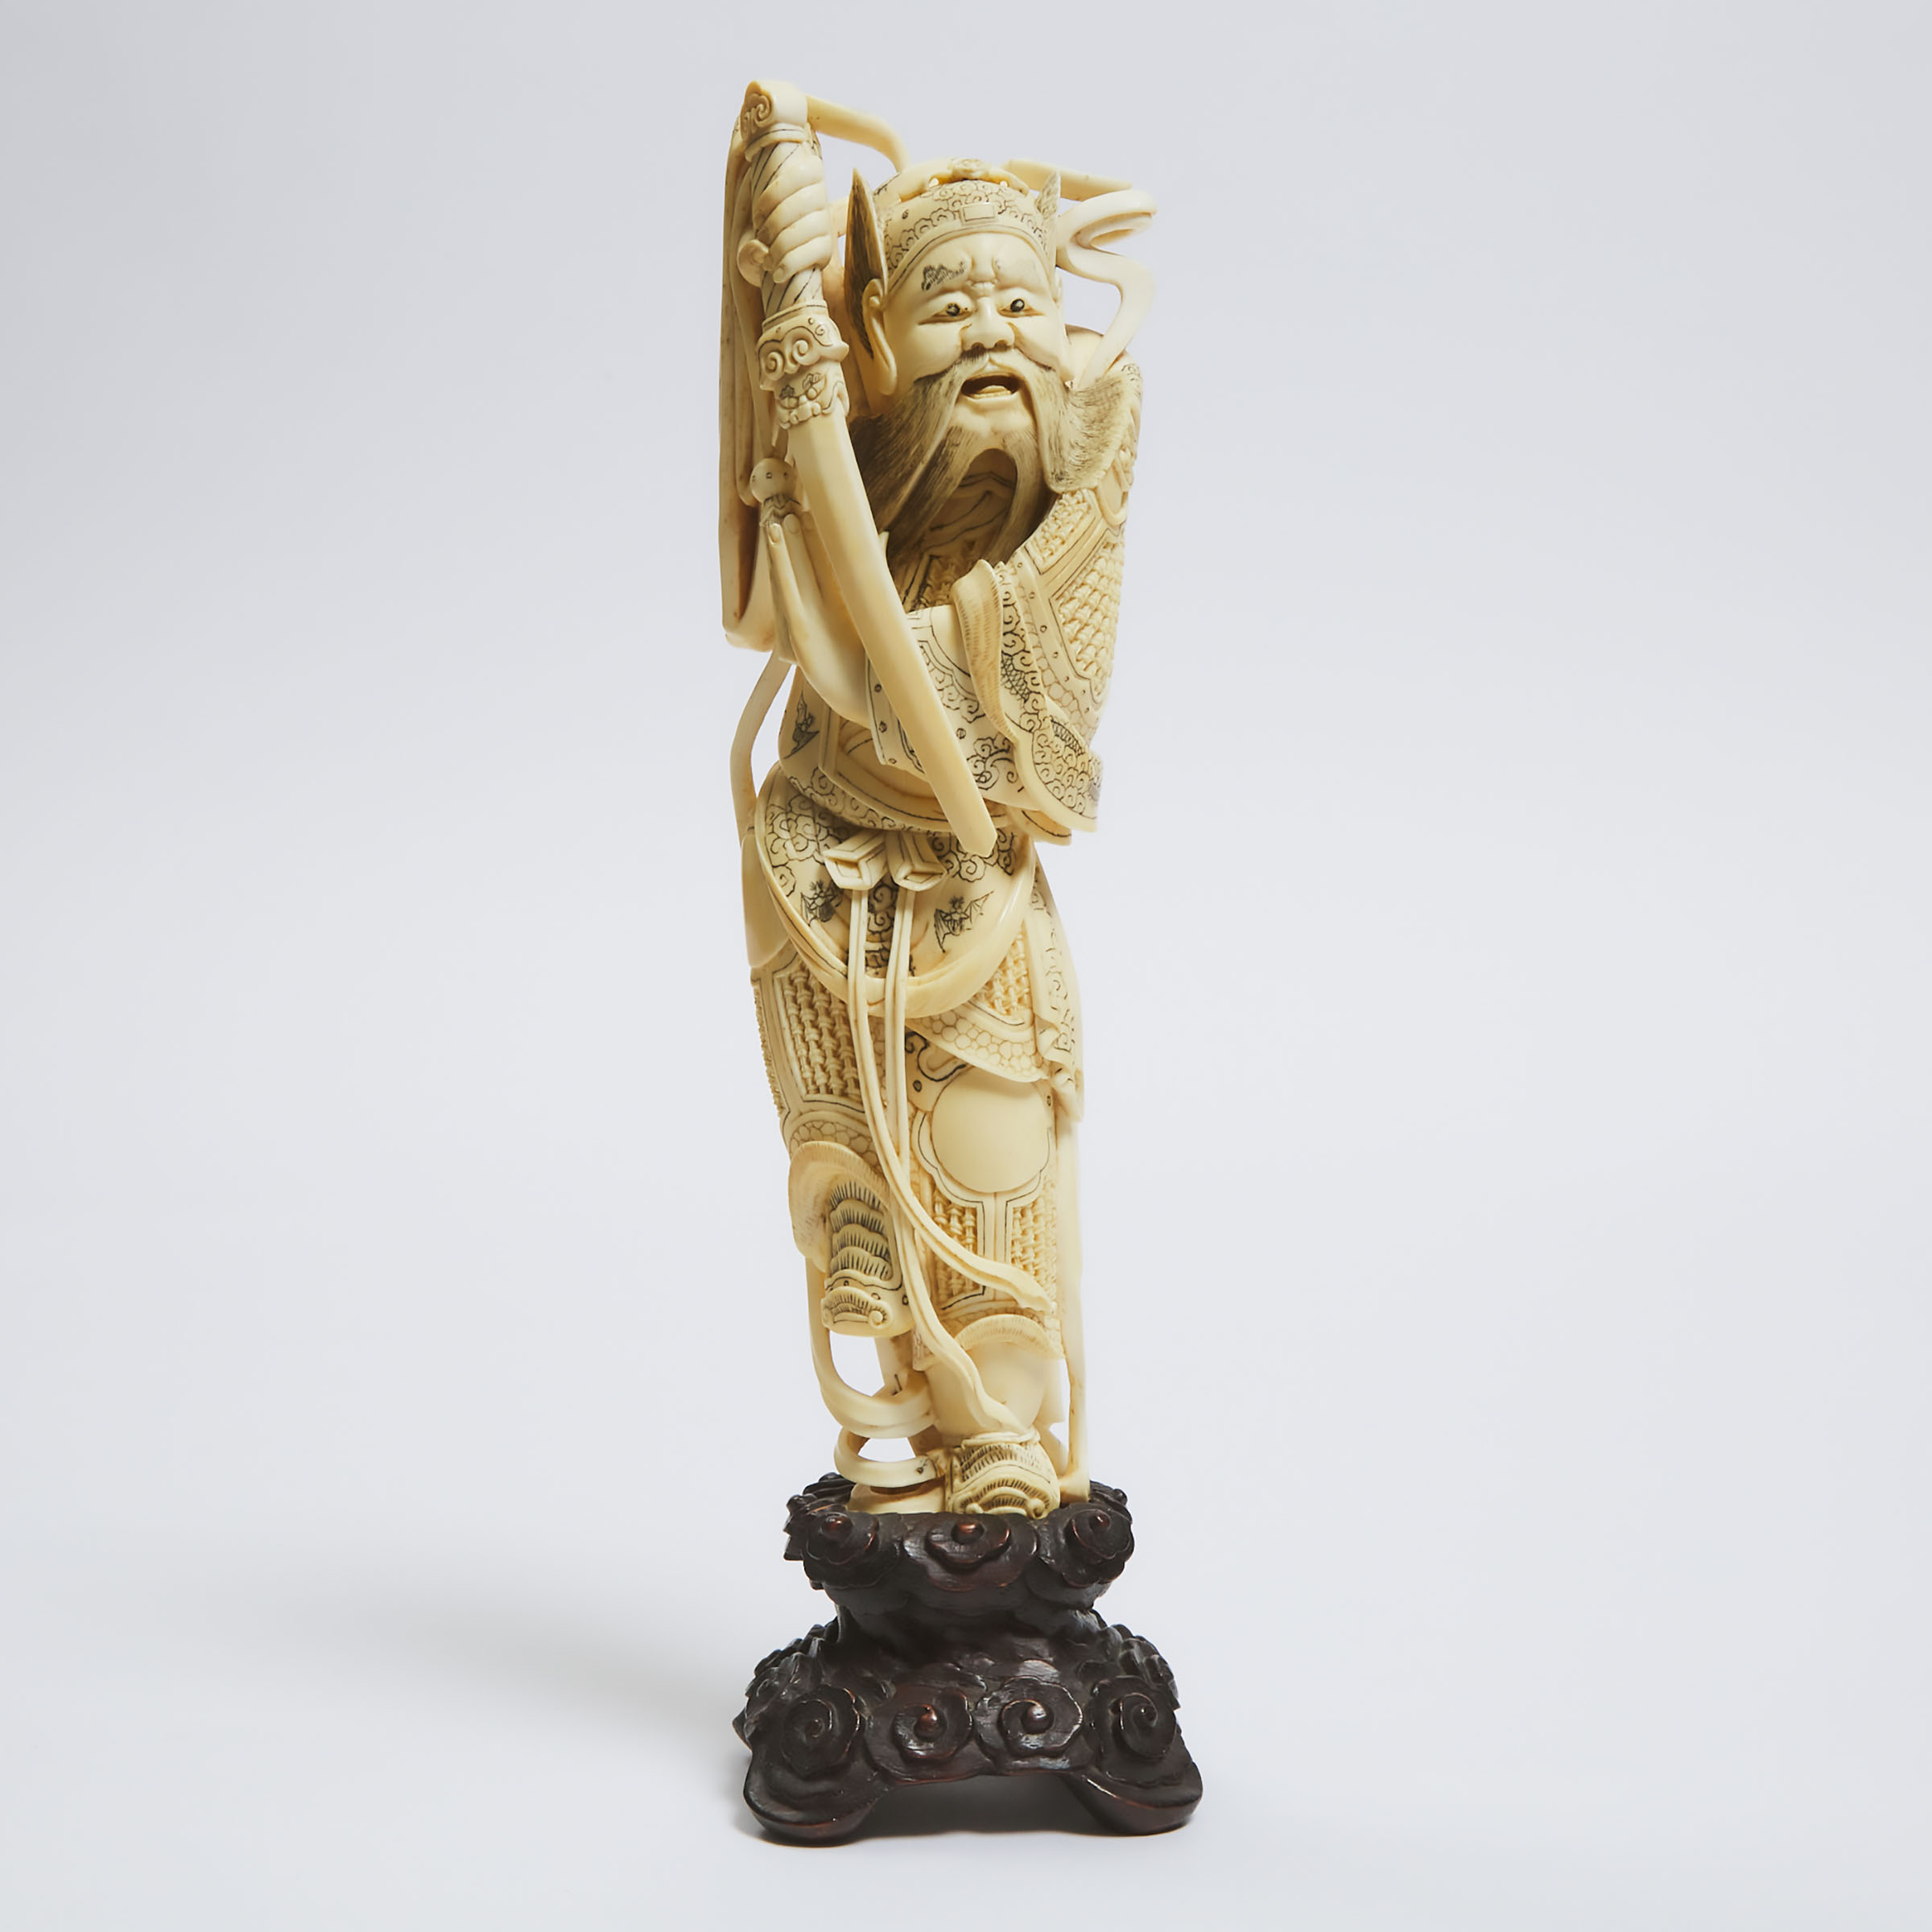 A Chinese Ivory Figure of Zhong